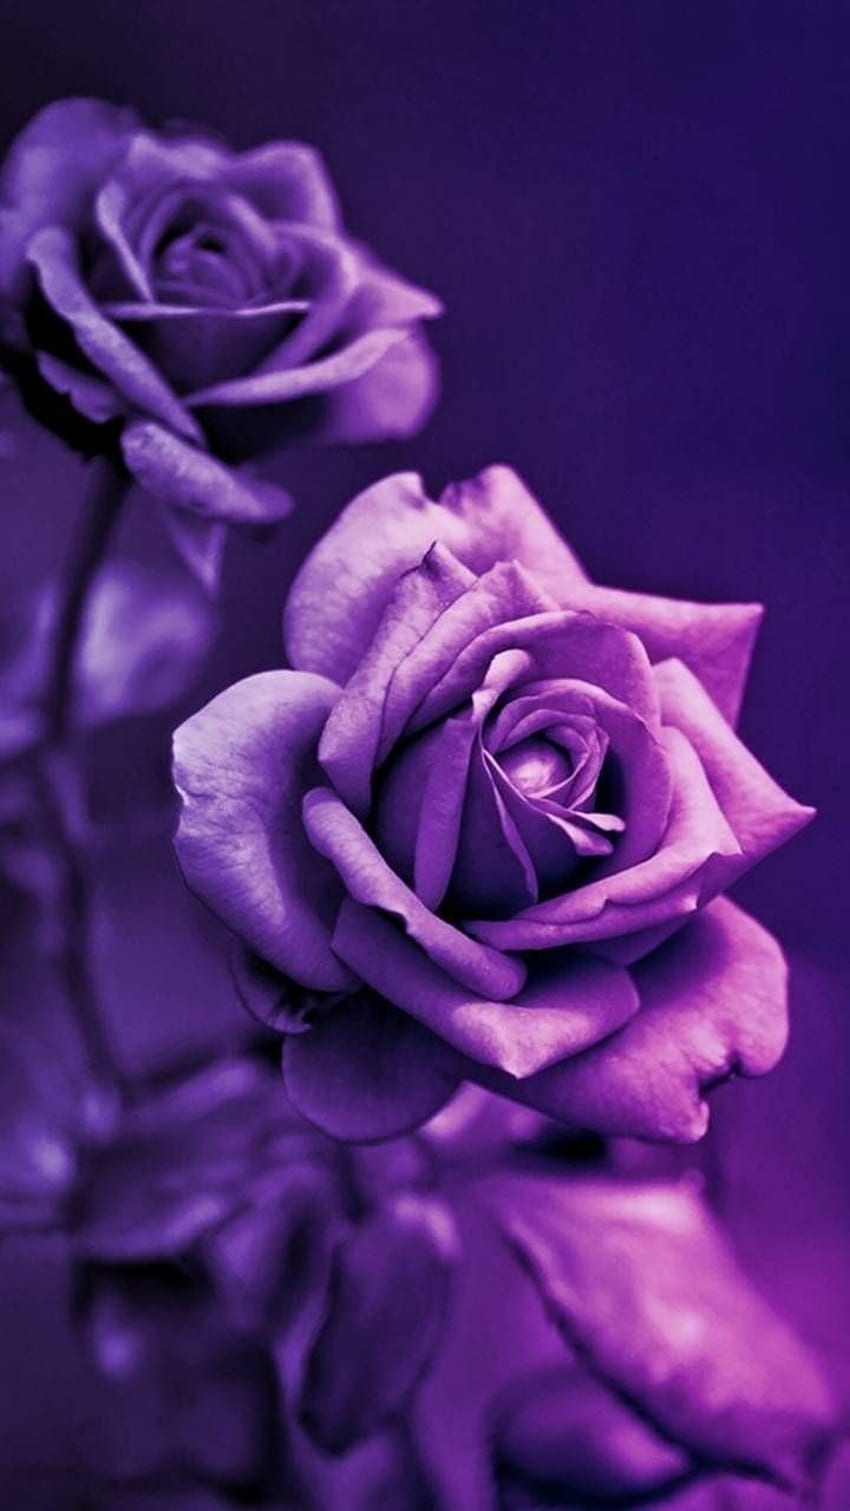 Mawar Ungu Latar Belakang Mawar pada tahun 2020. Mawar ungu, Bunga ungu, Mawar ungu, Mawar Lavender wallpaper ponsel HD